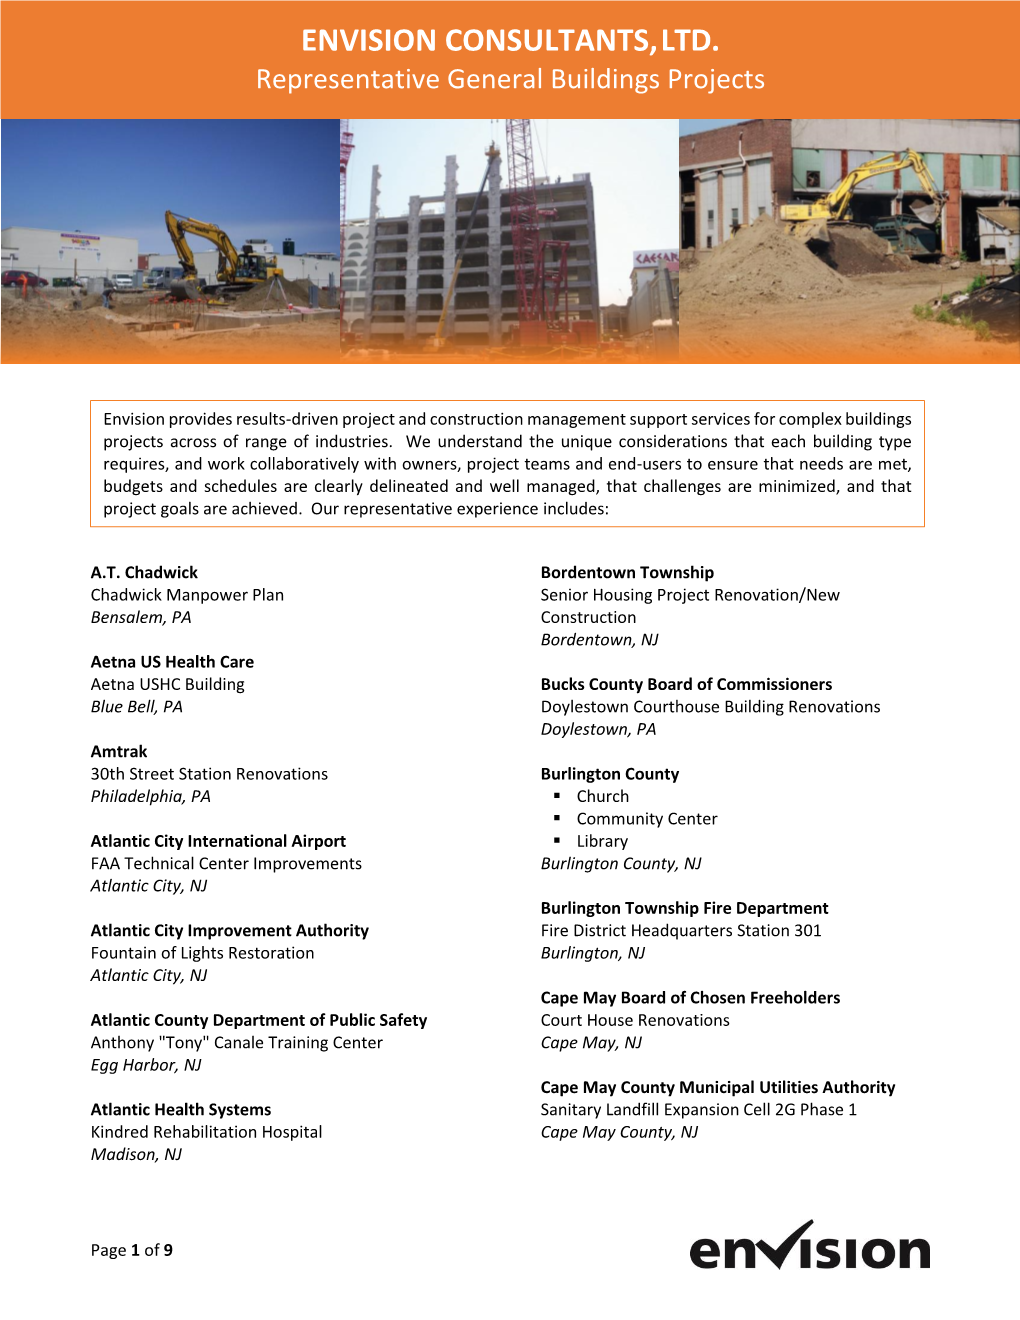 ENVISION CONSULTANTS, LTD. Representative General Buildings Projects